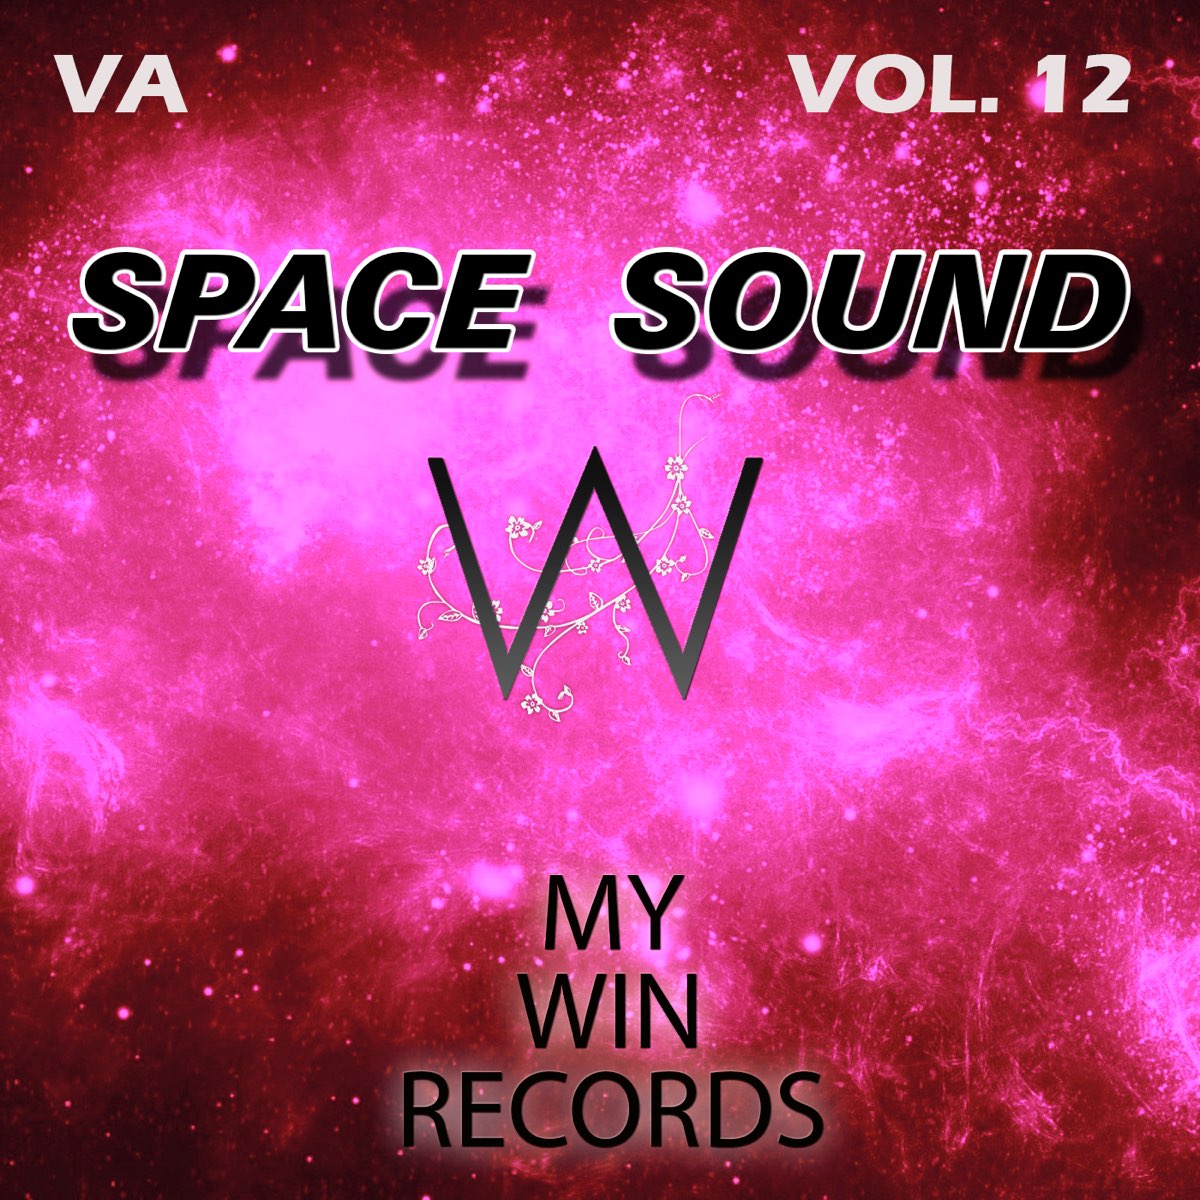 Remix mp 3. Саунд Спейс. Space обложки альбомов. Спейс ремикс.mp3. Space Sound mp3.